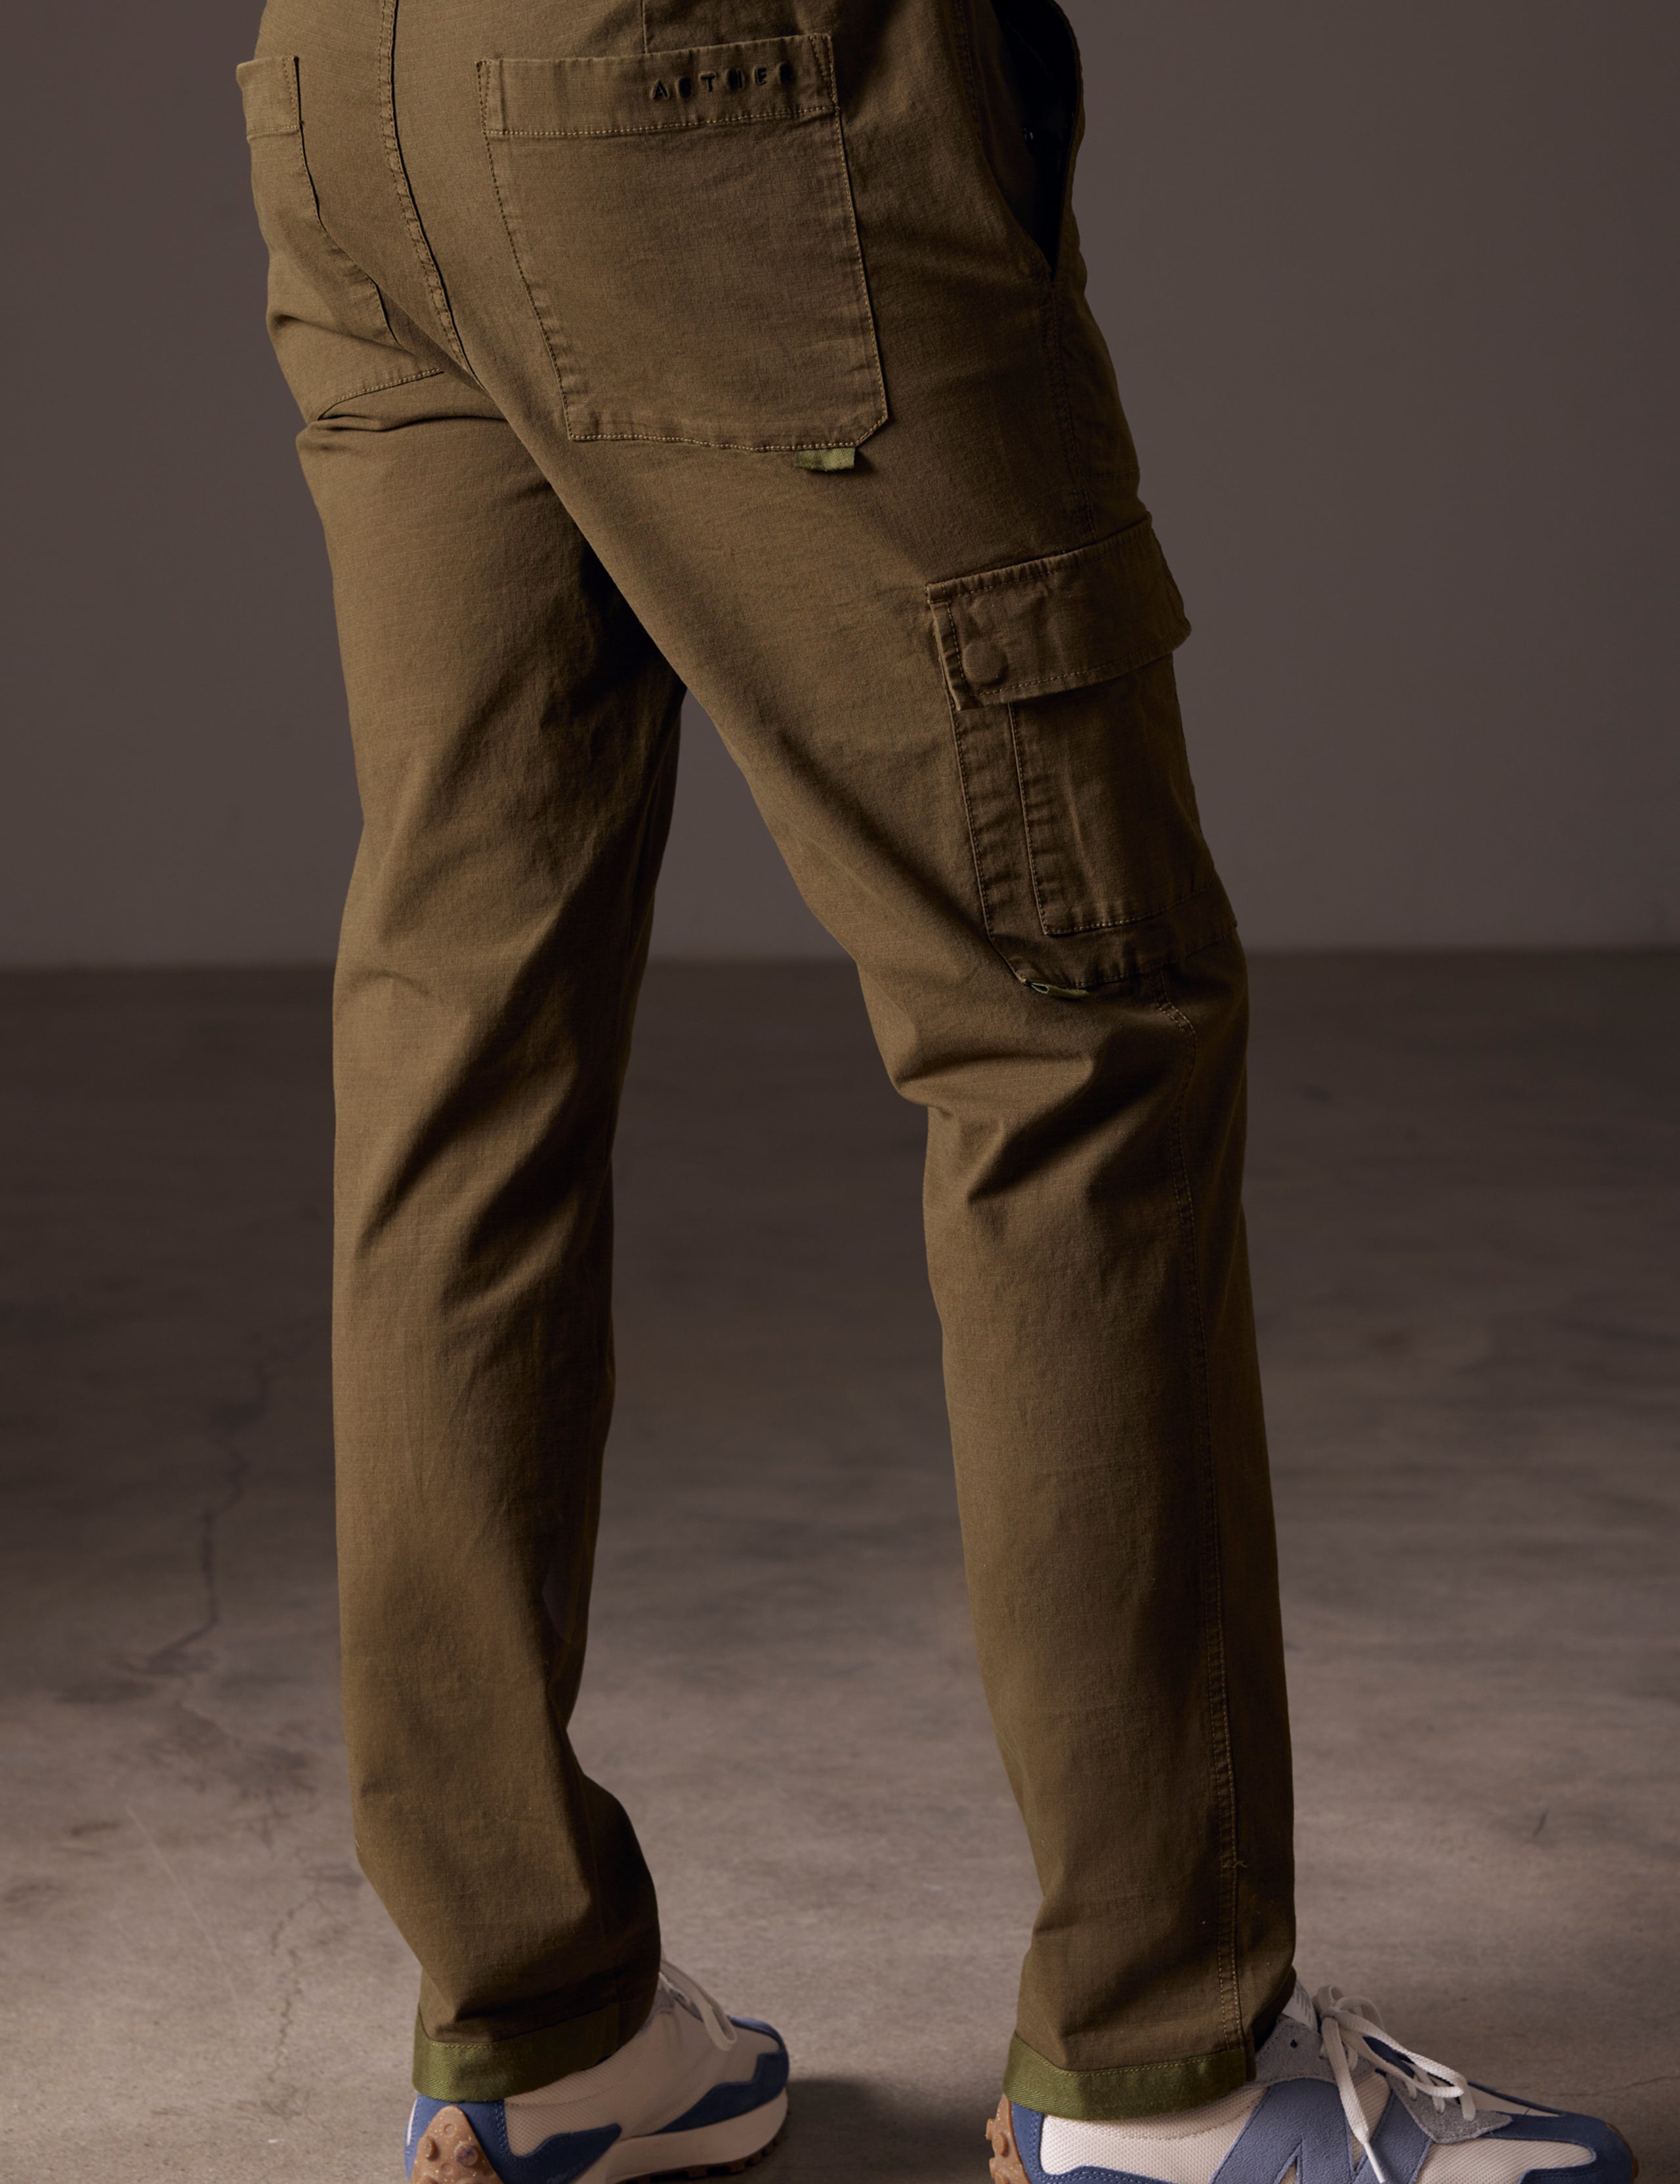 back view of man wearing green cotton ripstop pants